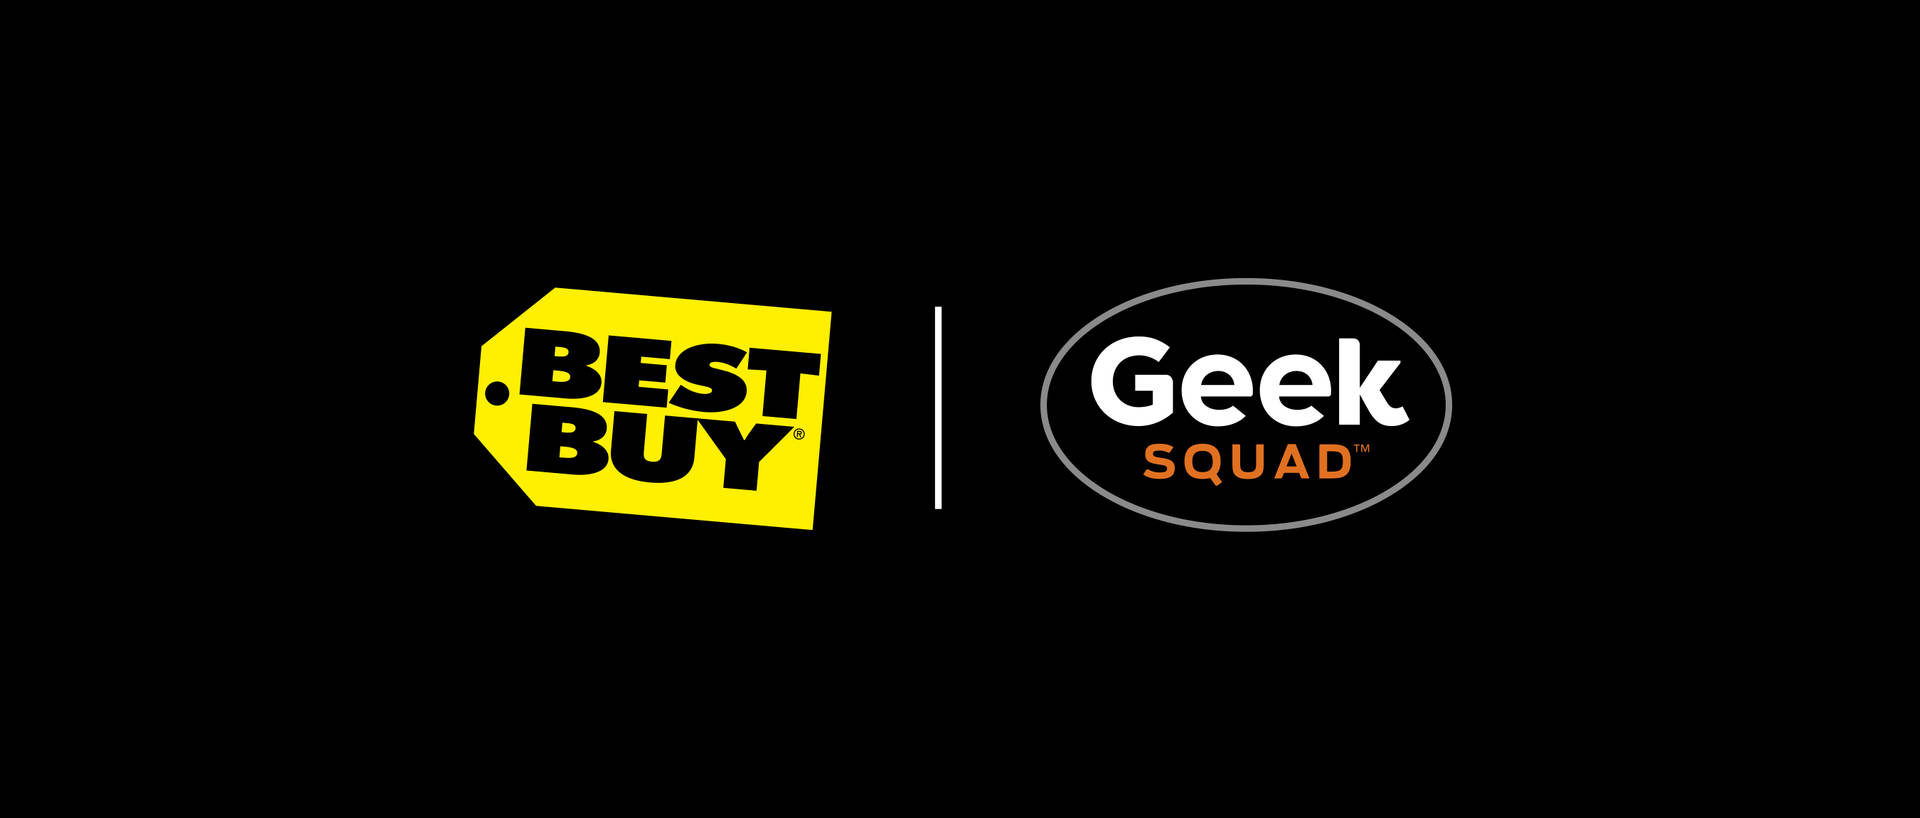 Best Buy Geek Squad Wallpaper